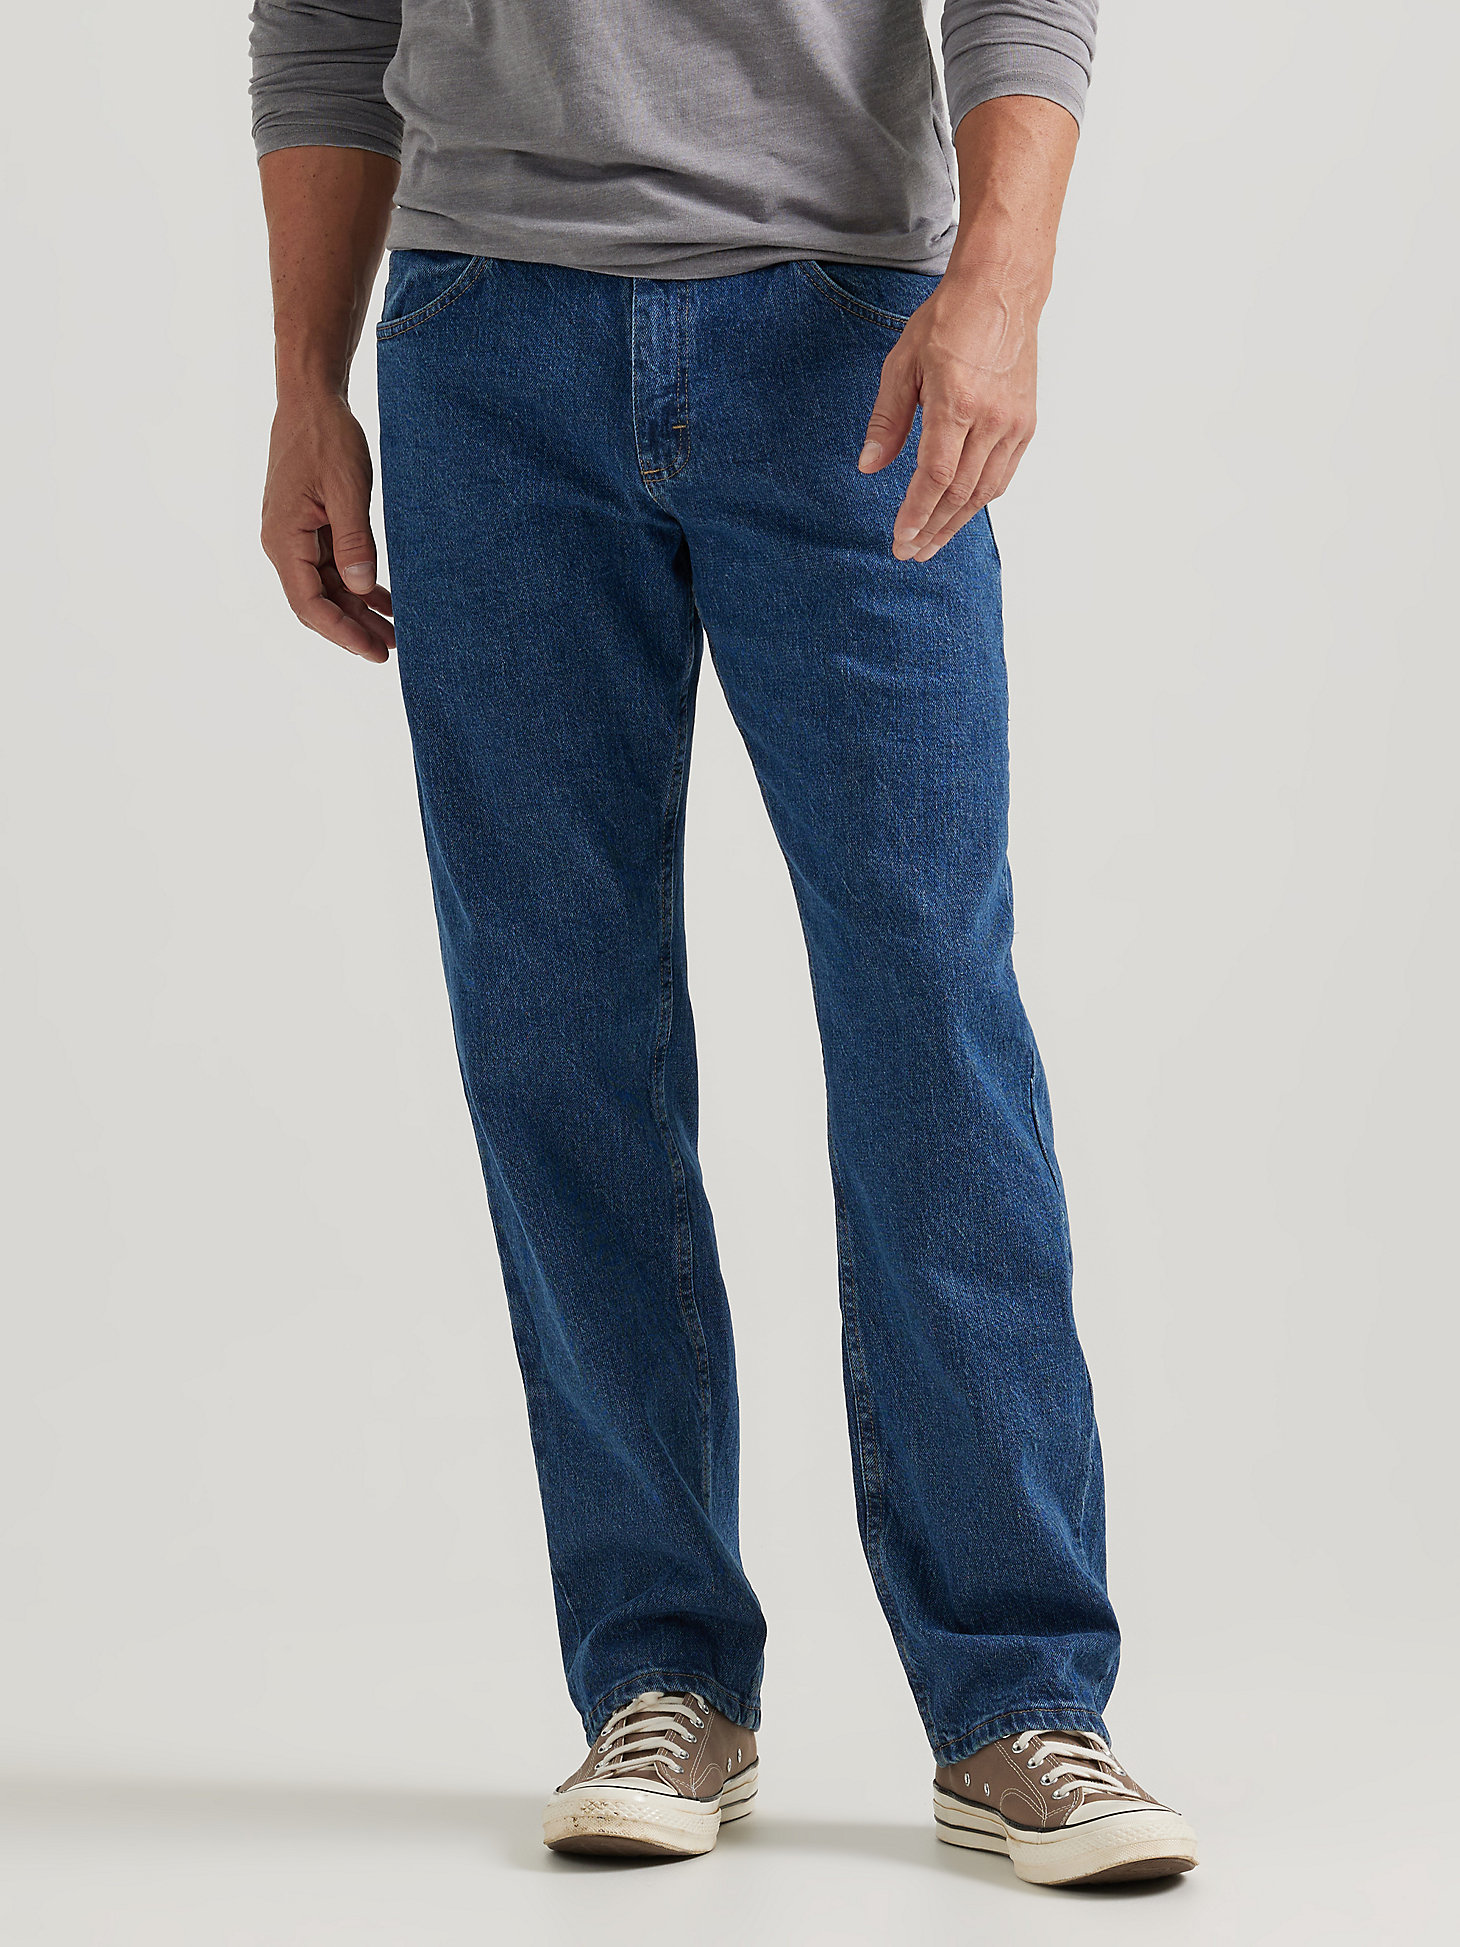 Men's Wrangler Authentics® Relaxed Fit Flex Jean in Dark Stonewash main view